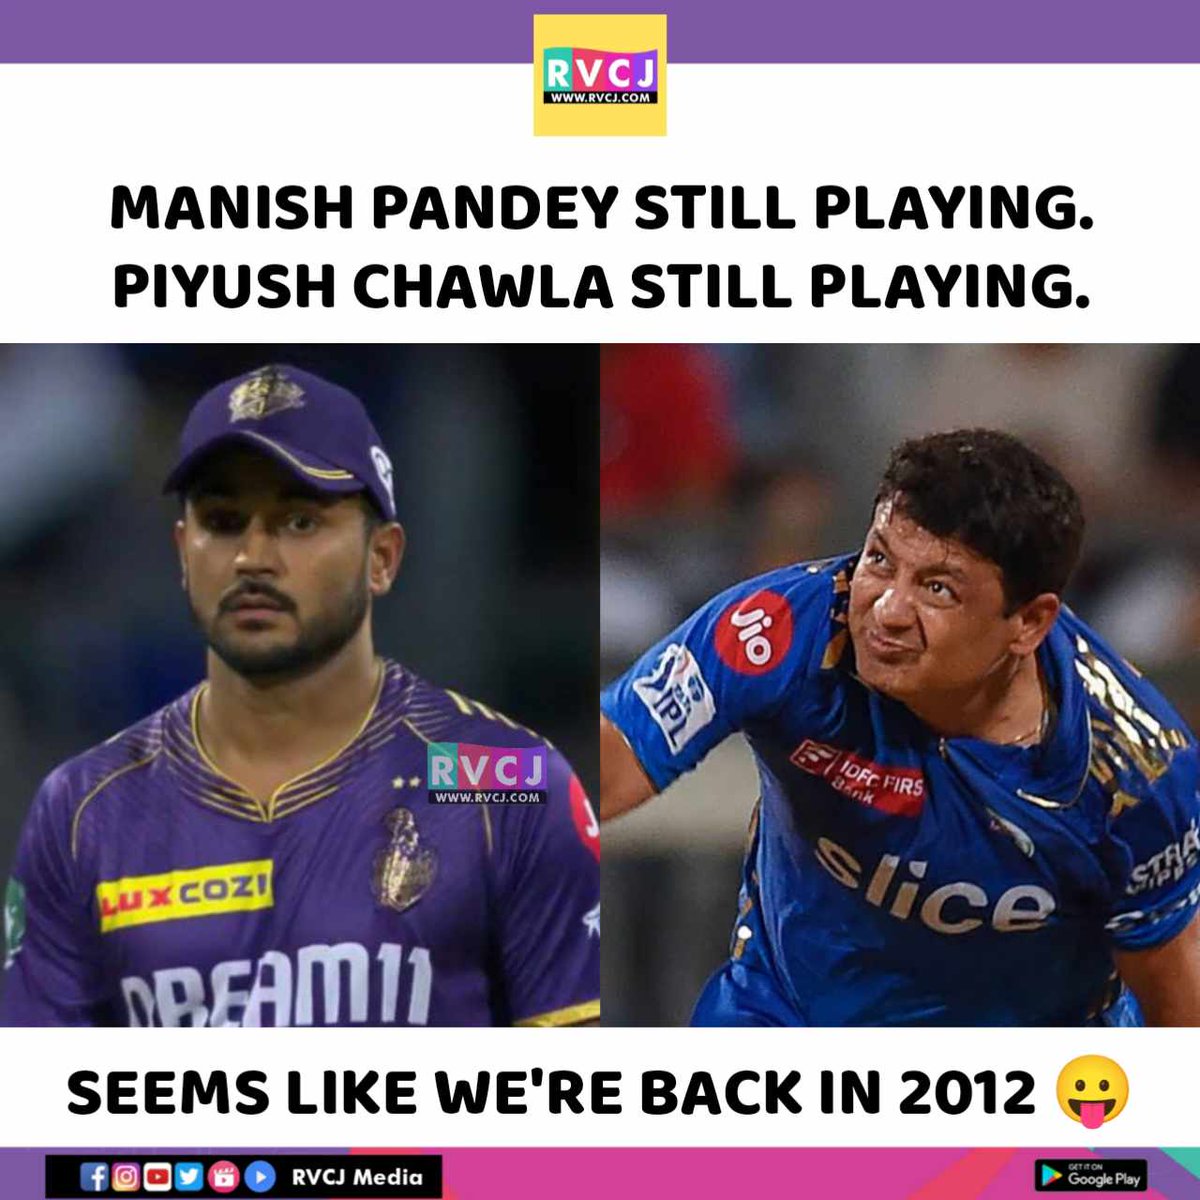 Manish Pandey and piyush chawla
#piyushchawla
#manishpandey